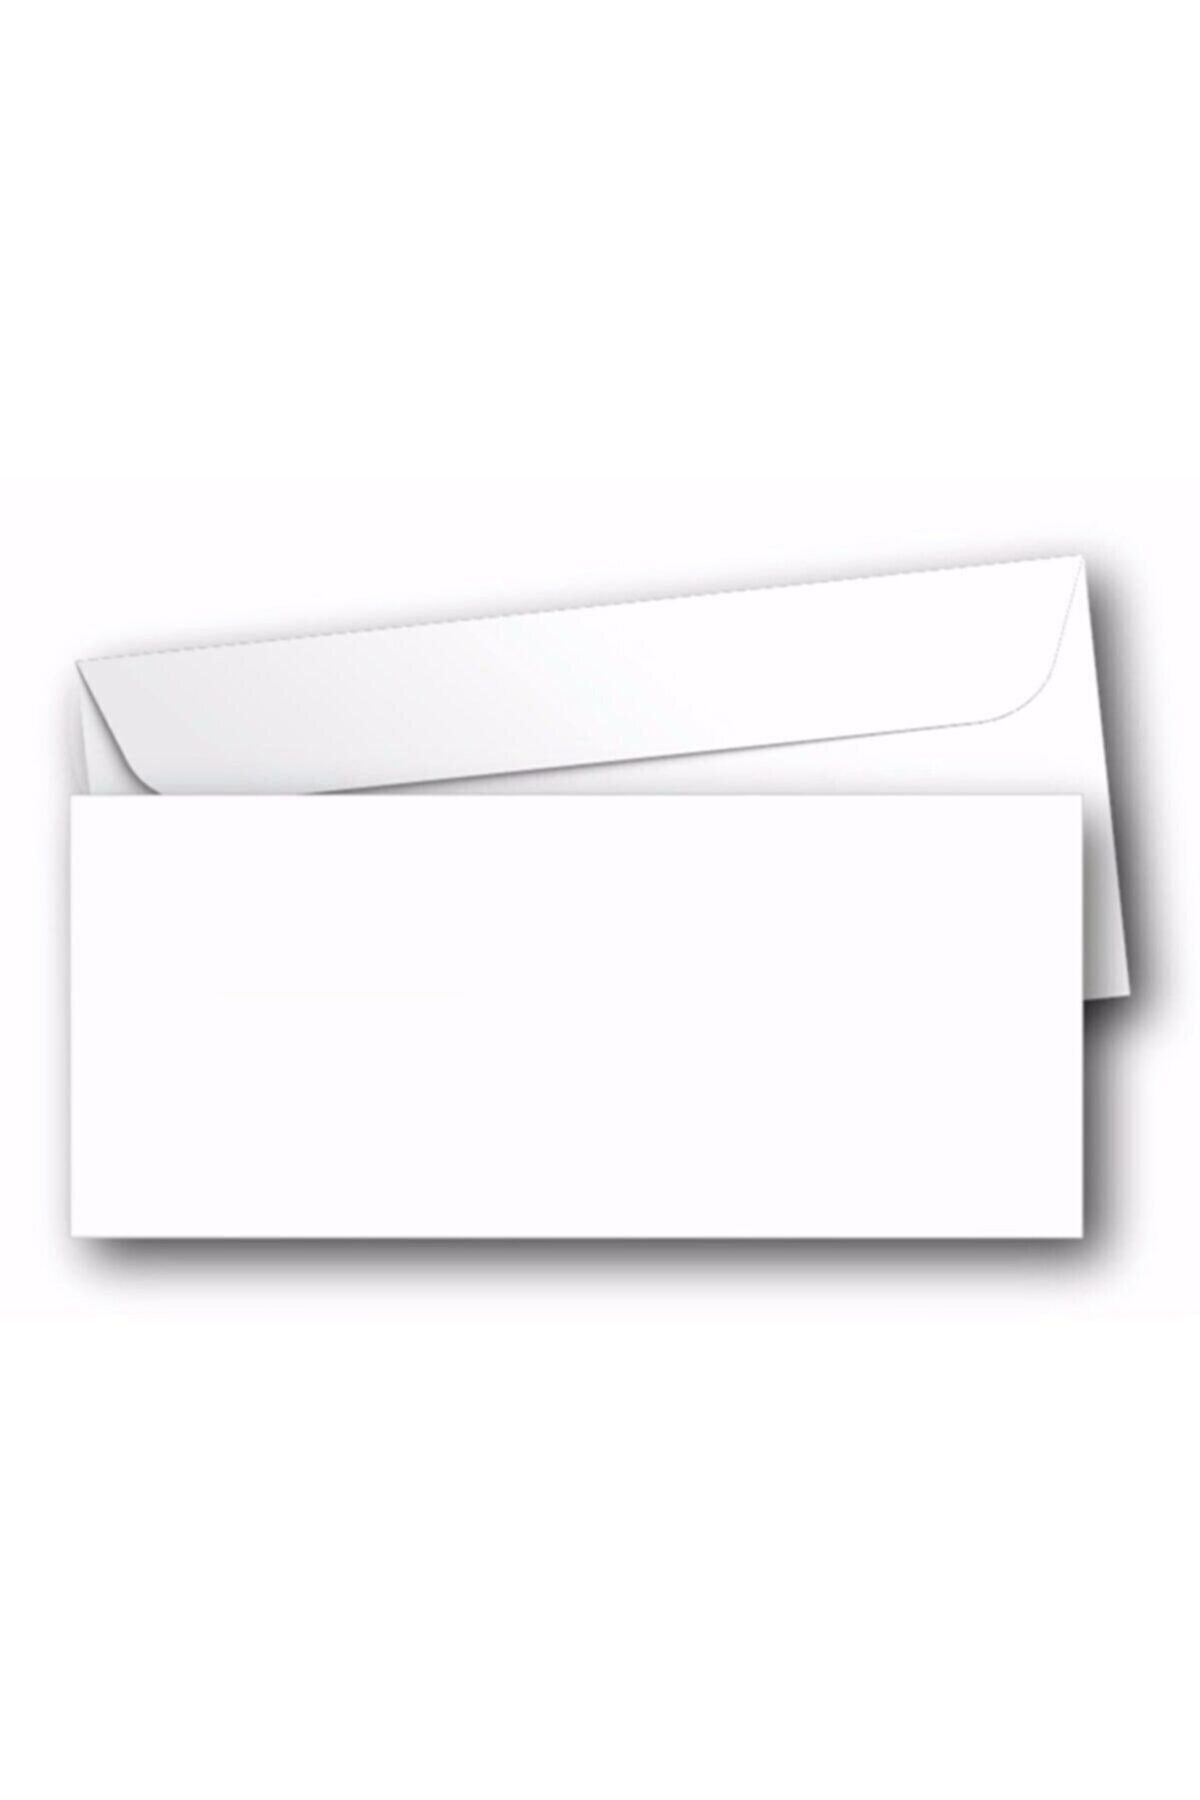 Diplomat Beyaz Zarf 200'lü 105x240 - 110 Gr